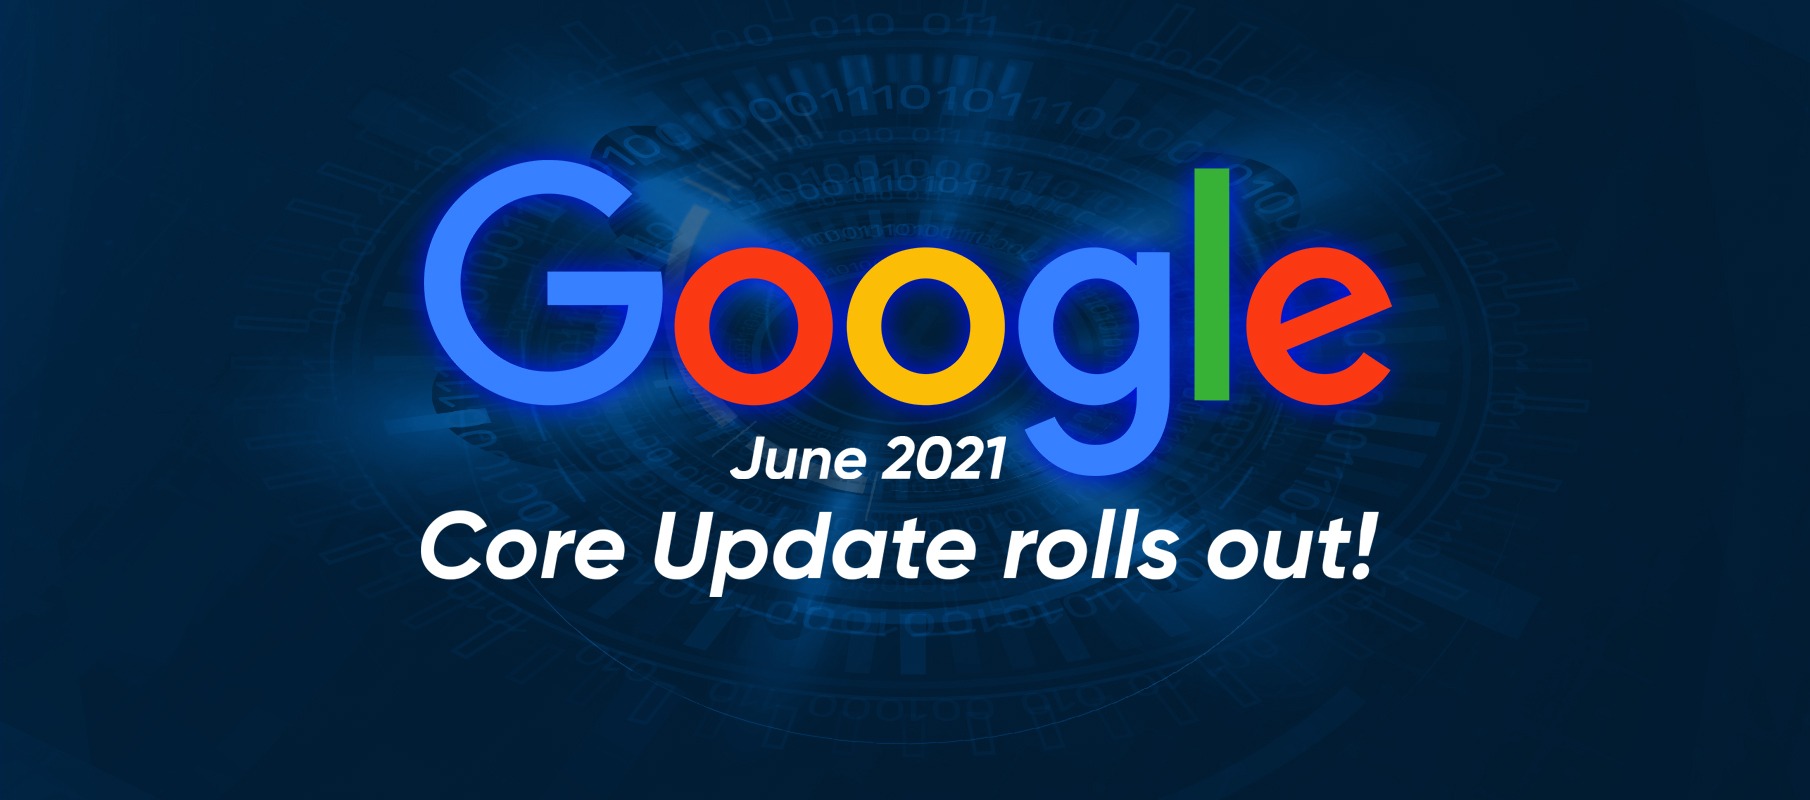 Google June 2021 Core Update Rolls Out!